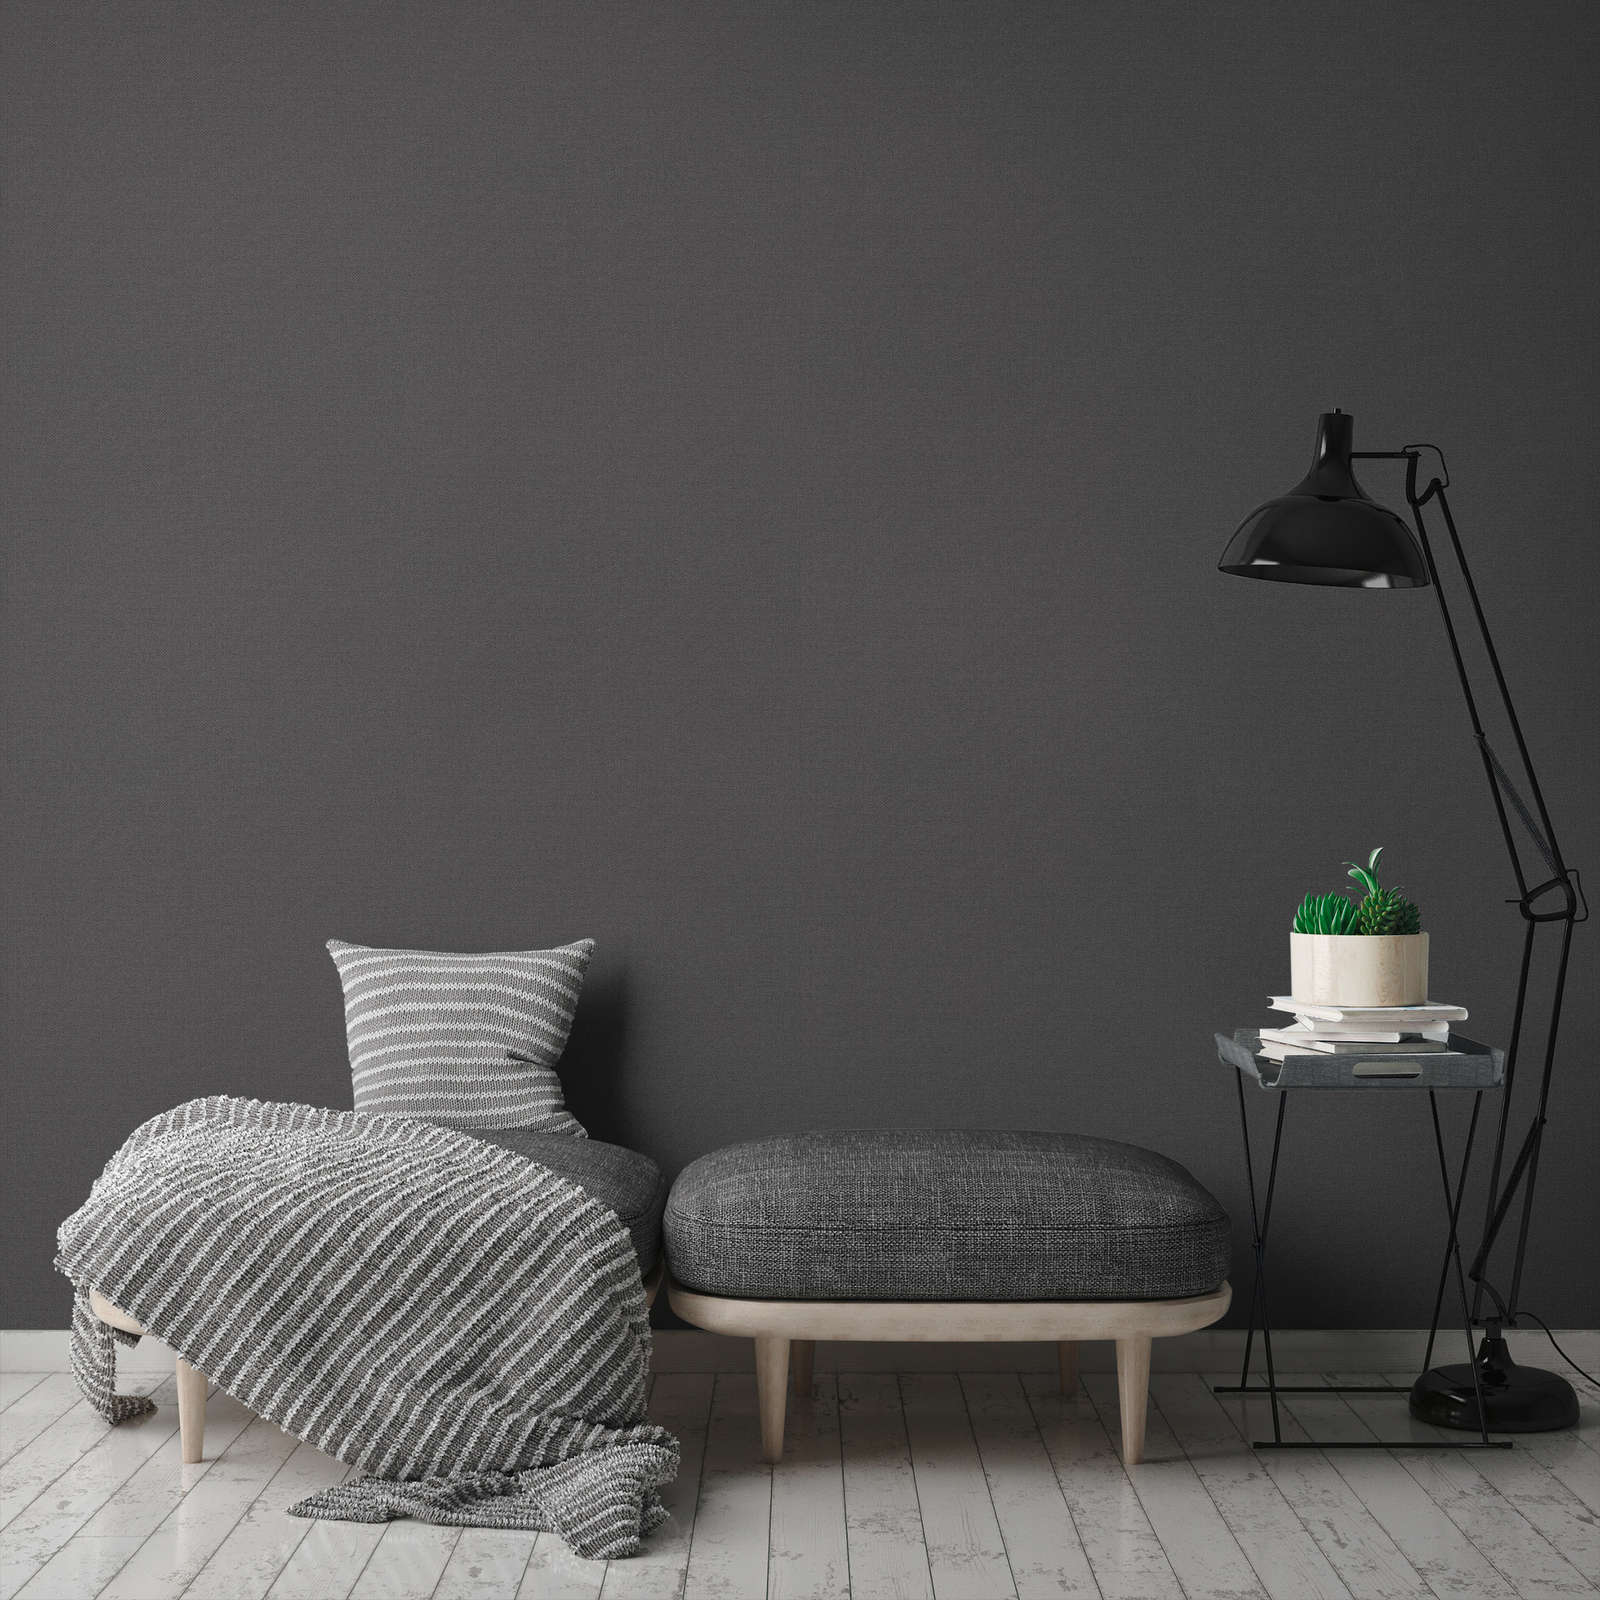             Linen look wallpaper plain with texture design - grey, black
        